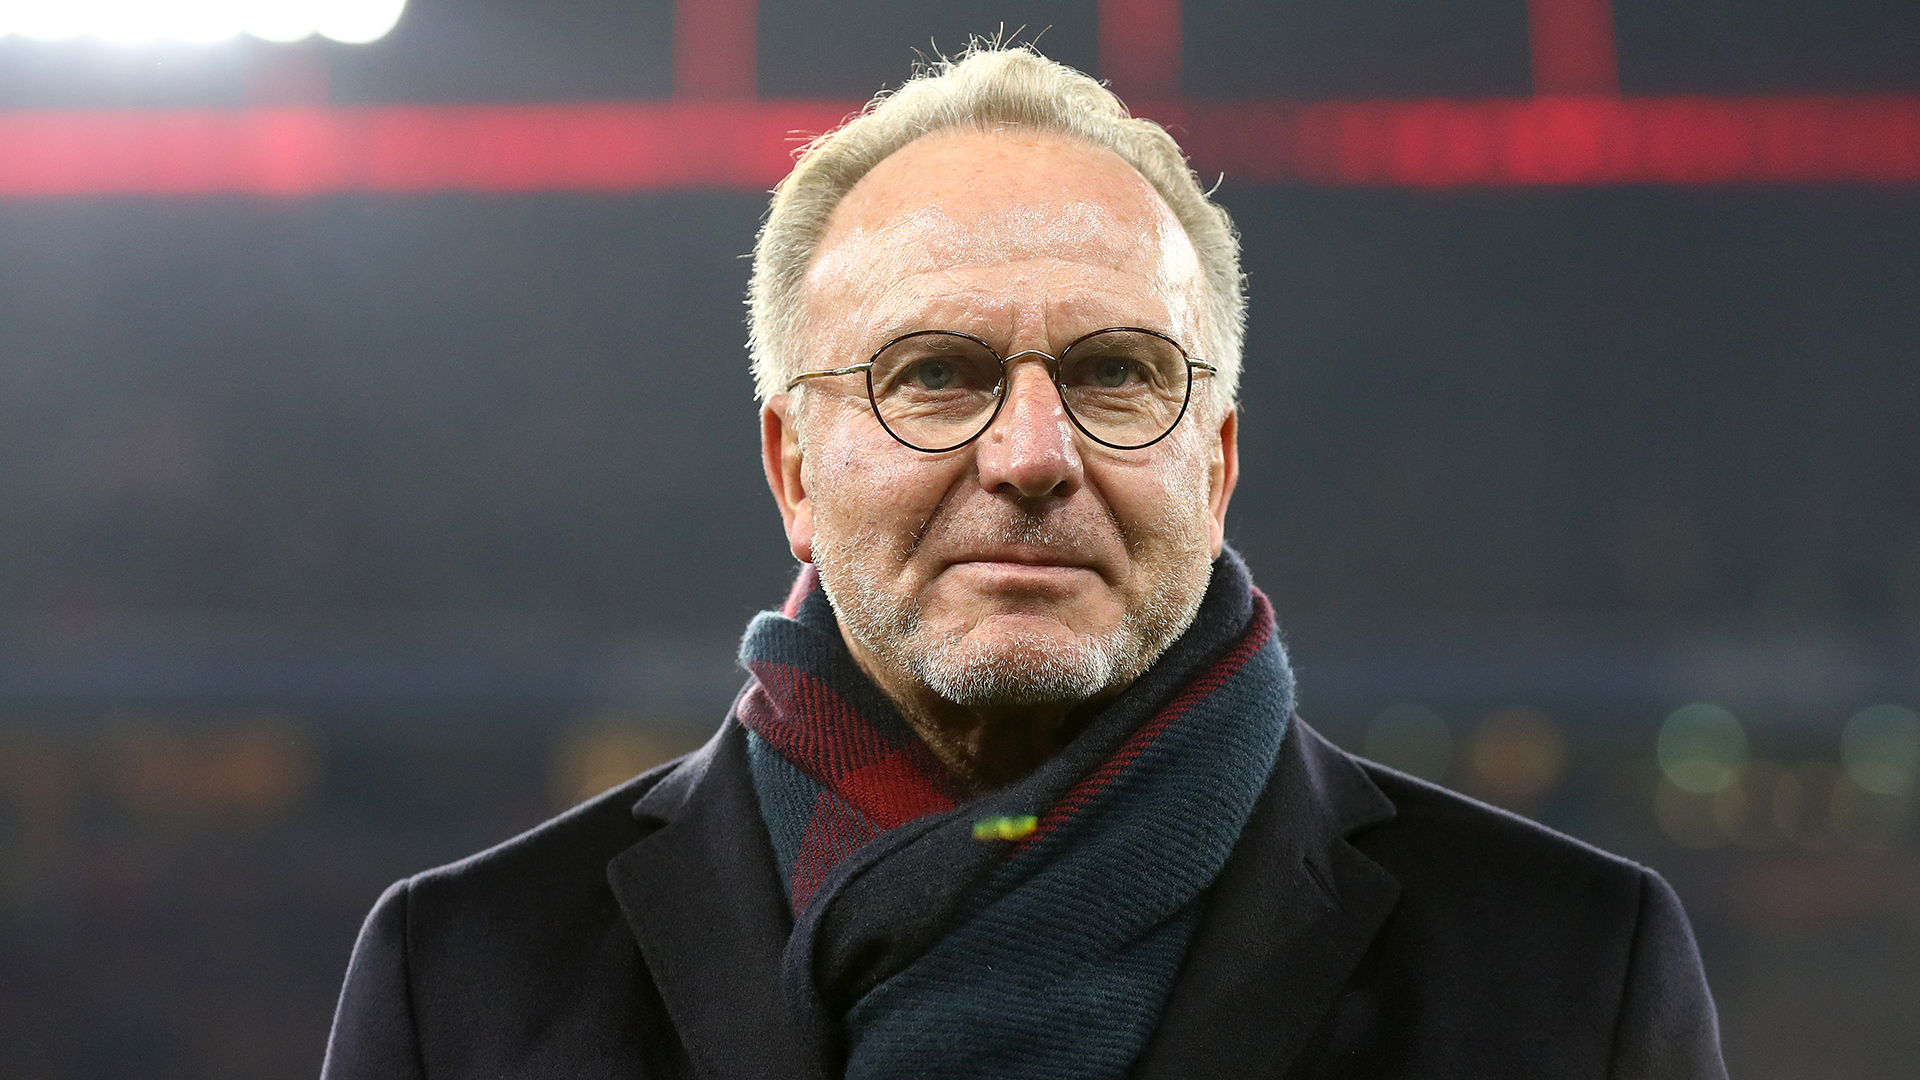 No immediate new Bayern sports director after Salihamidzic promotion